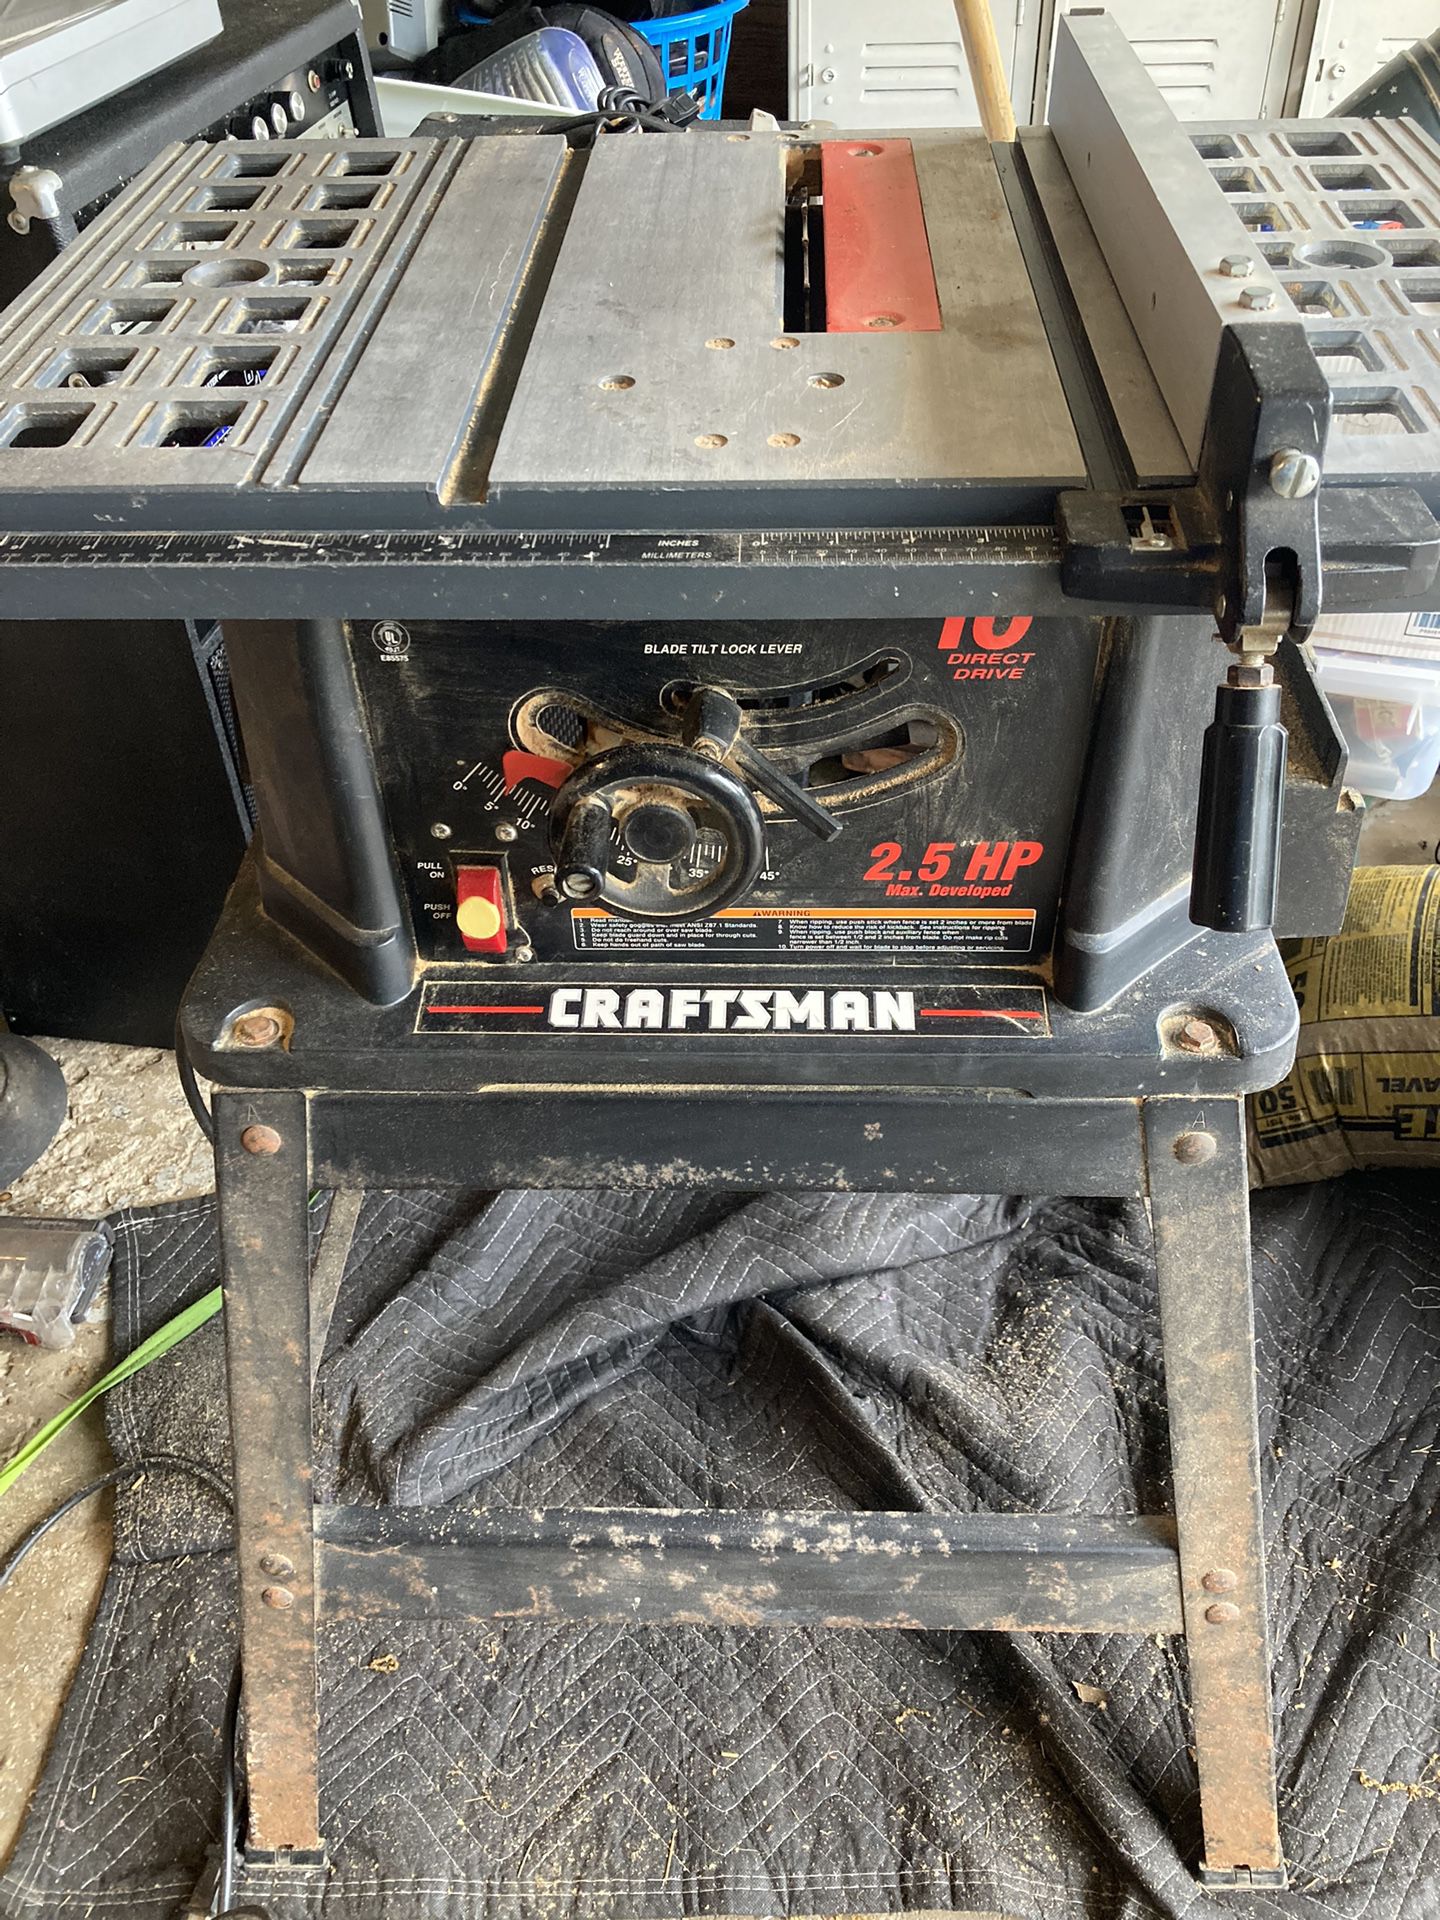 Craftsman 10” Table Saw. 2.5 HP